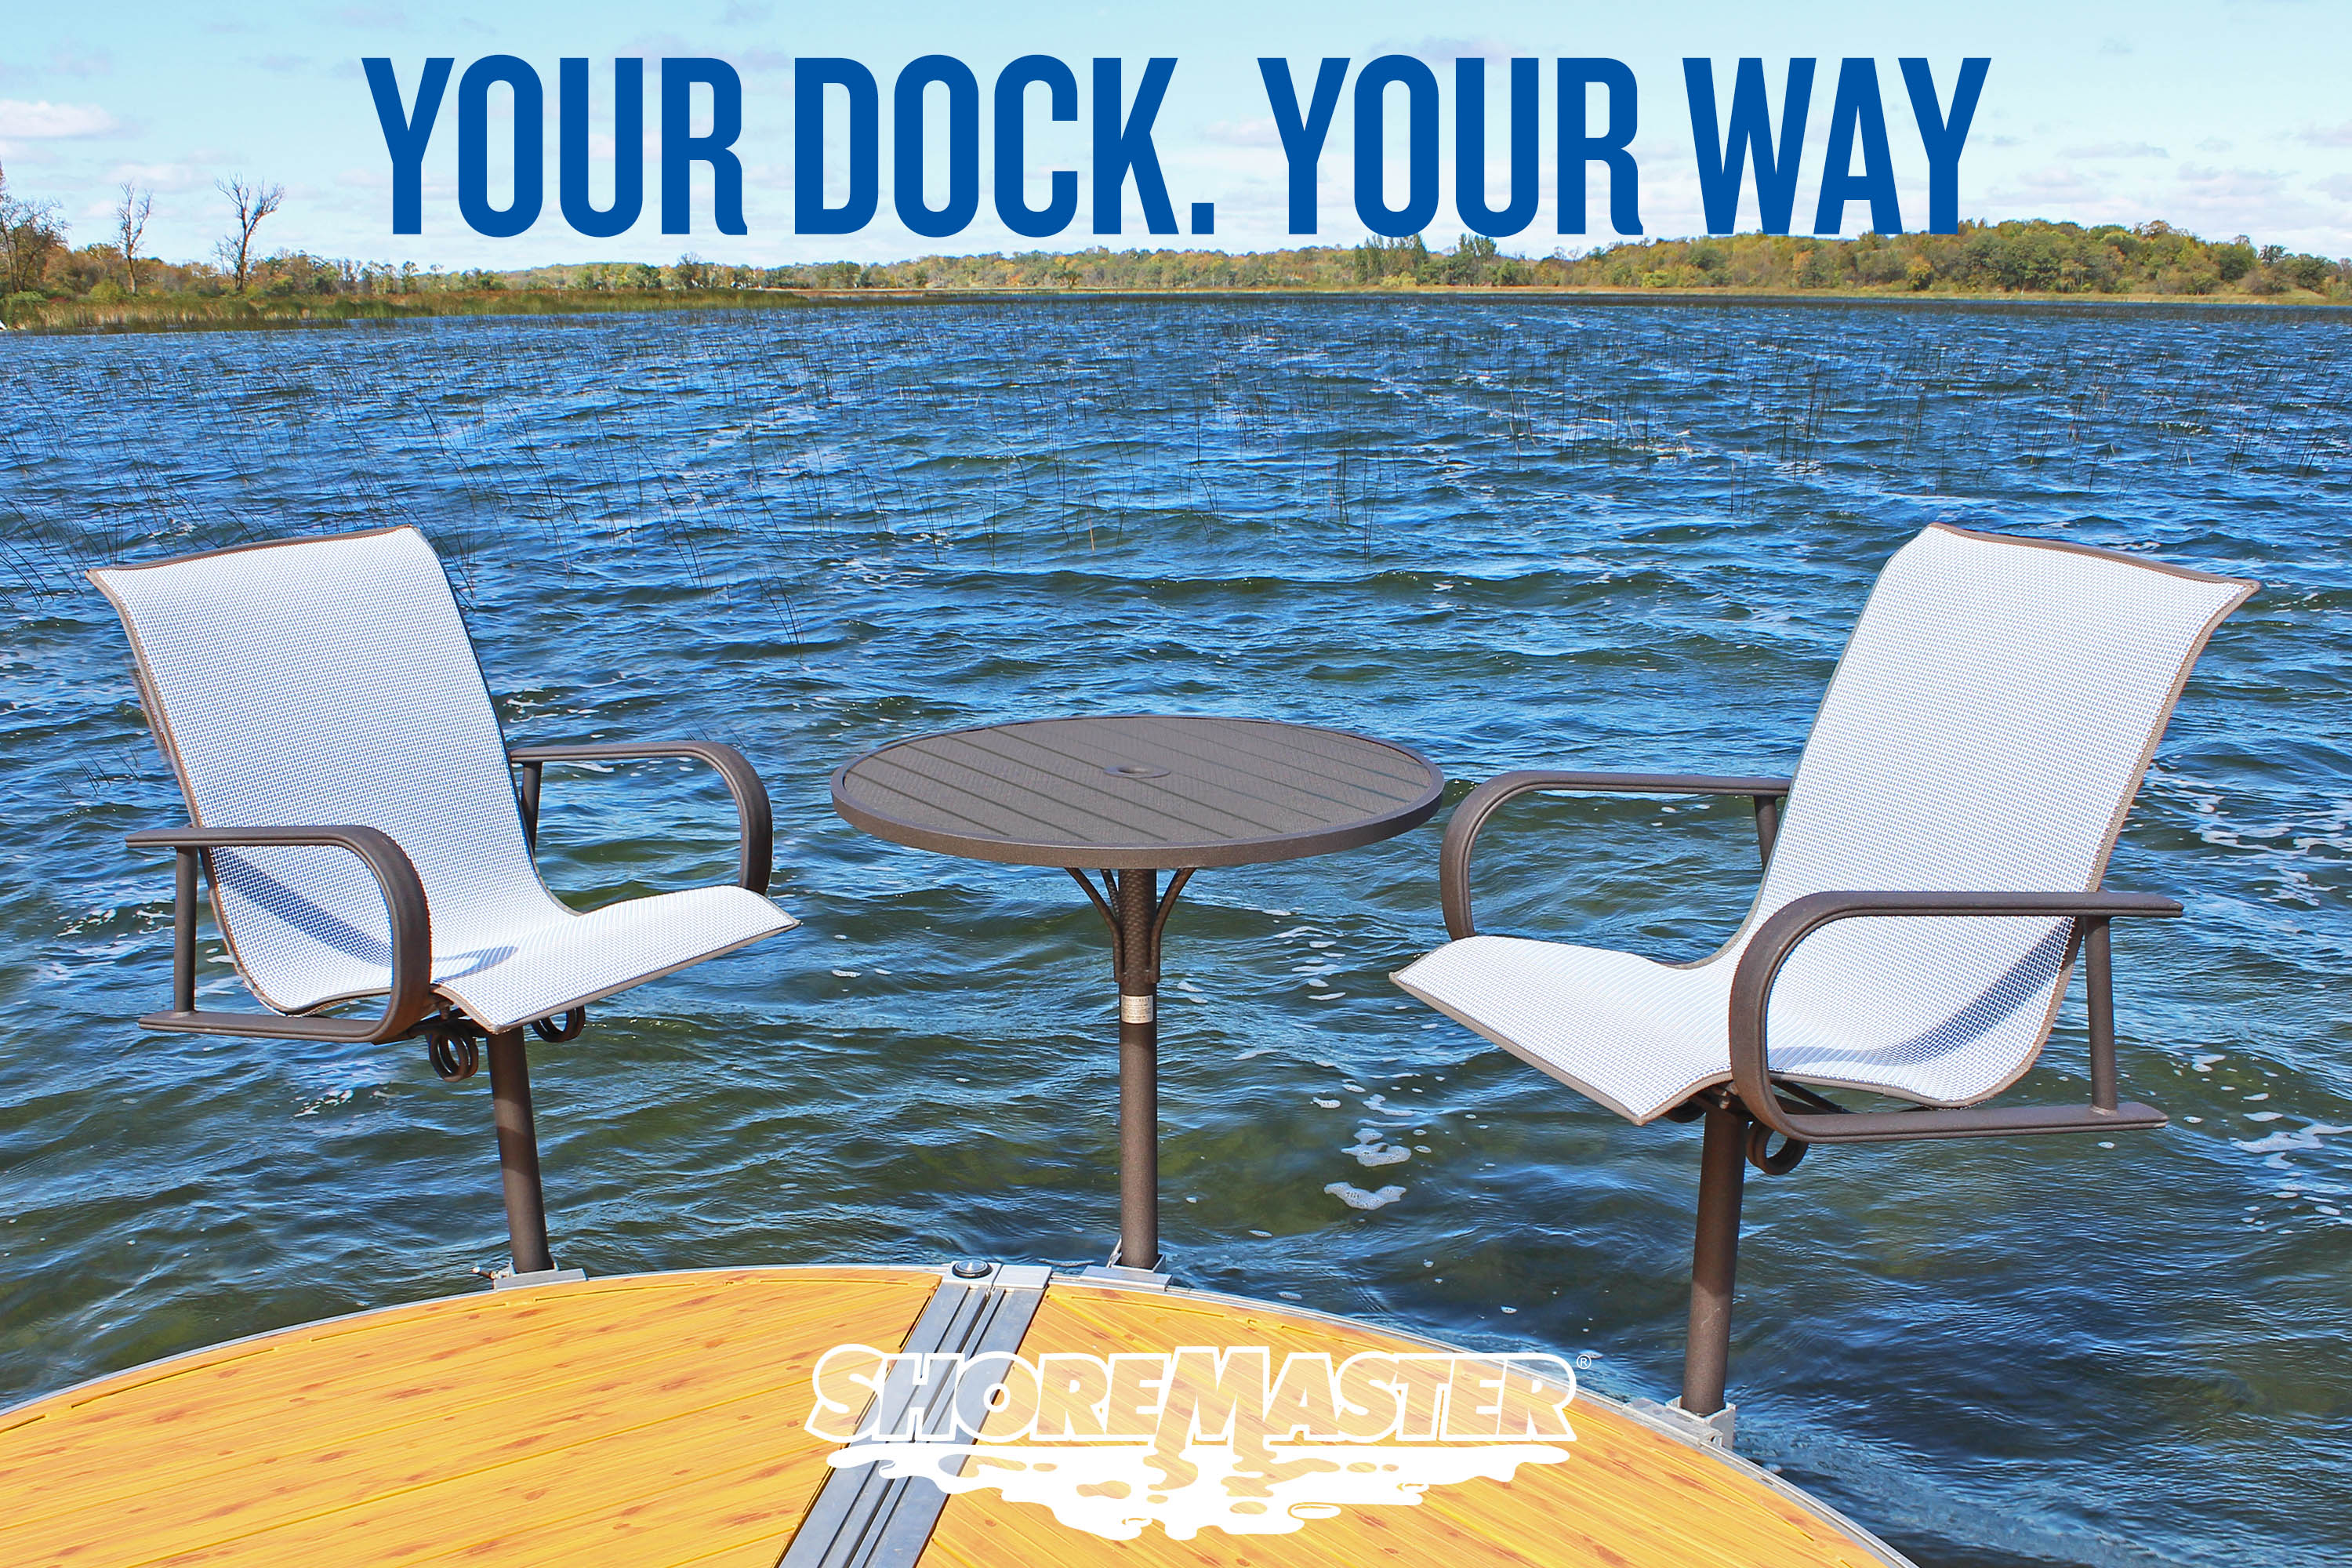 NEW Premium Dock Furniture from ShoreMaster and Homecrest Outdoor ...